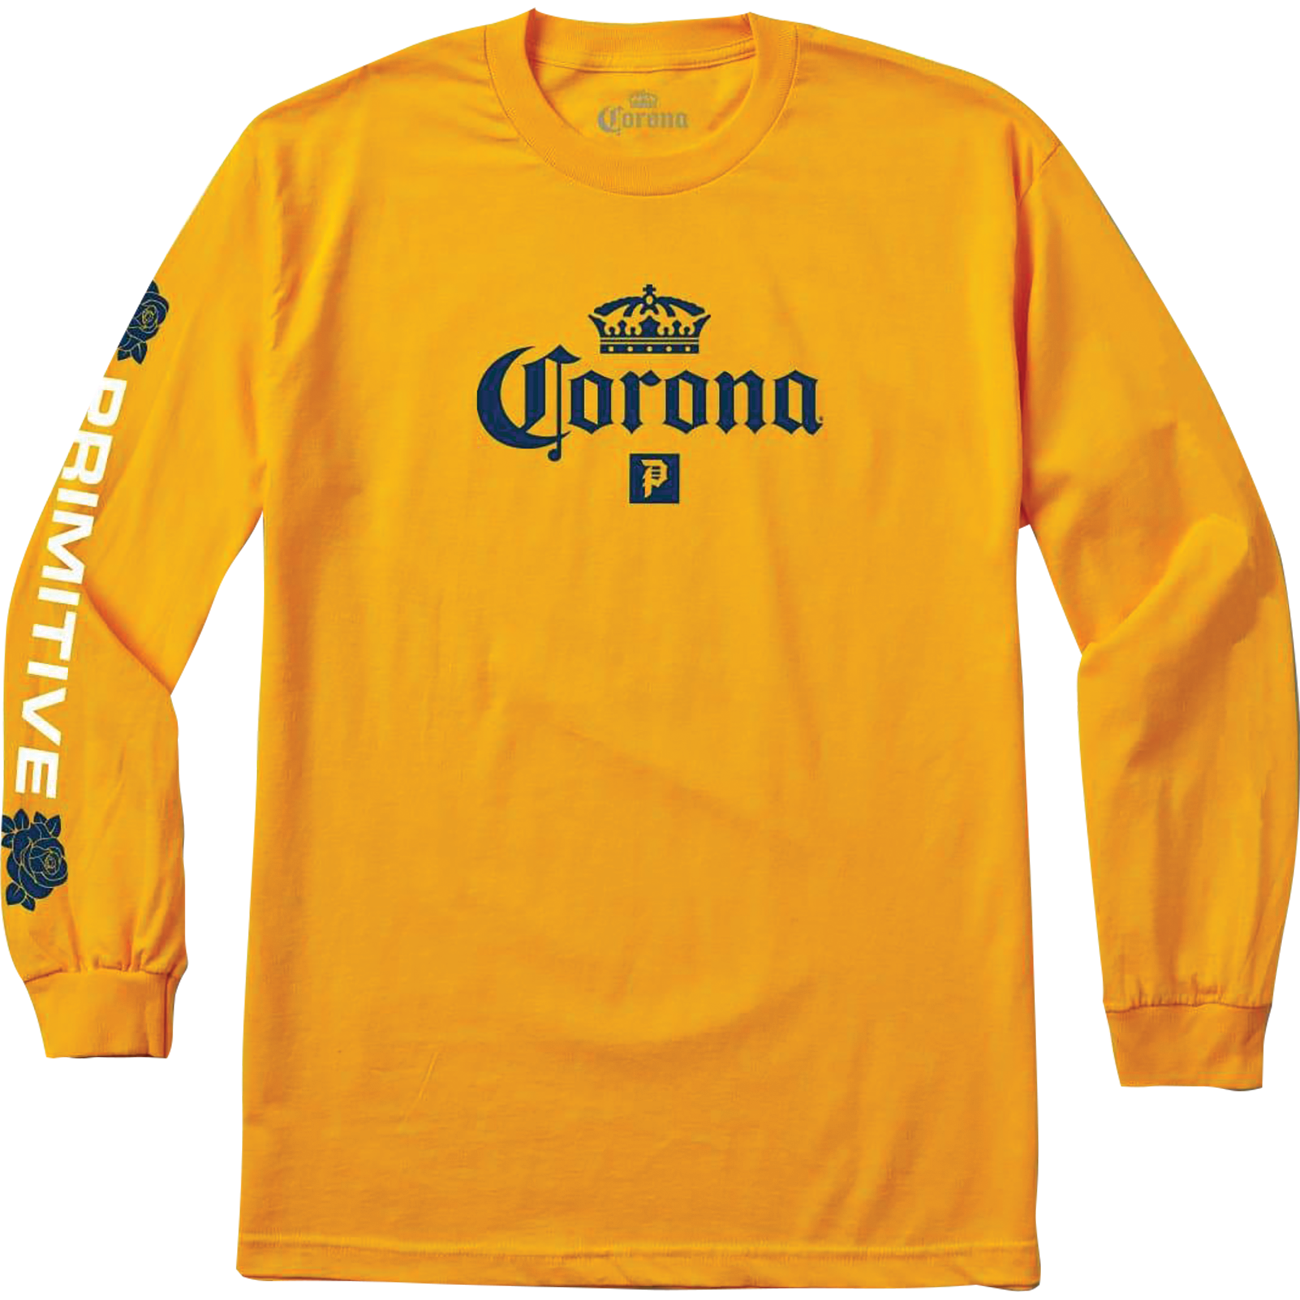 Primitive Corona Cerveza Long Sleeve T-Shirt - Gold